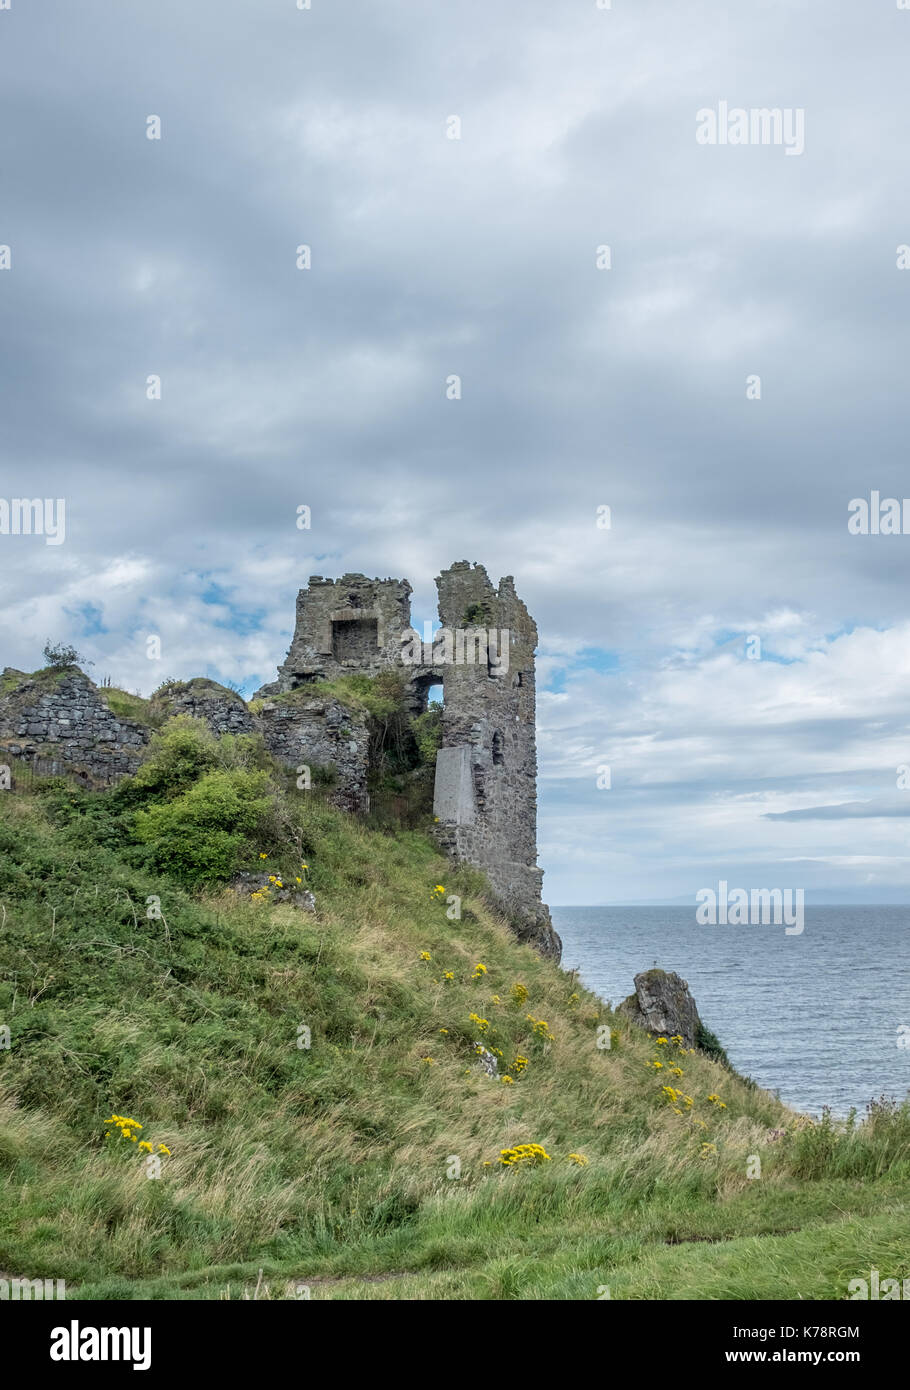 Ruinen An Der Kuste Bei Dunure Ayr Schottland Richtung Meer Suchen Stockfotografie Alamy